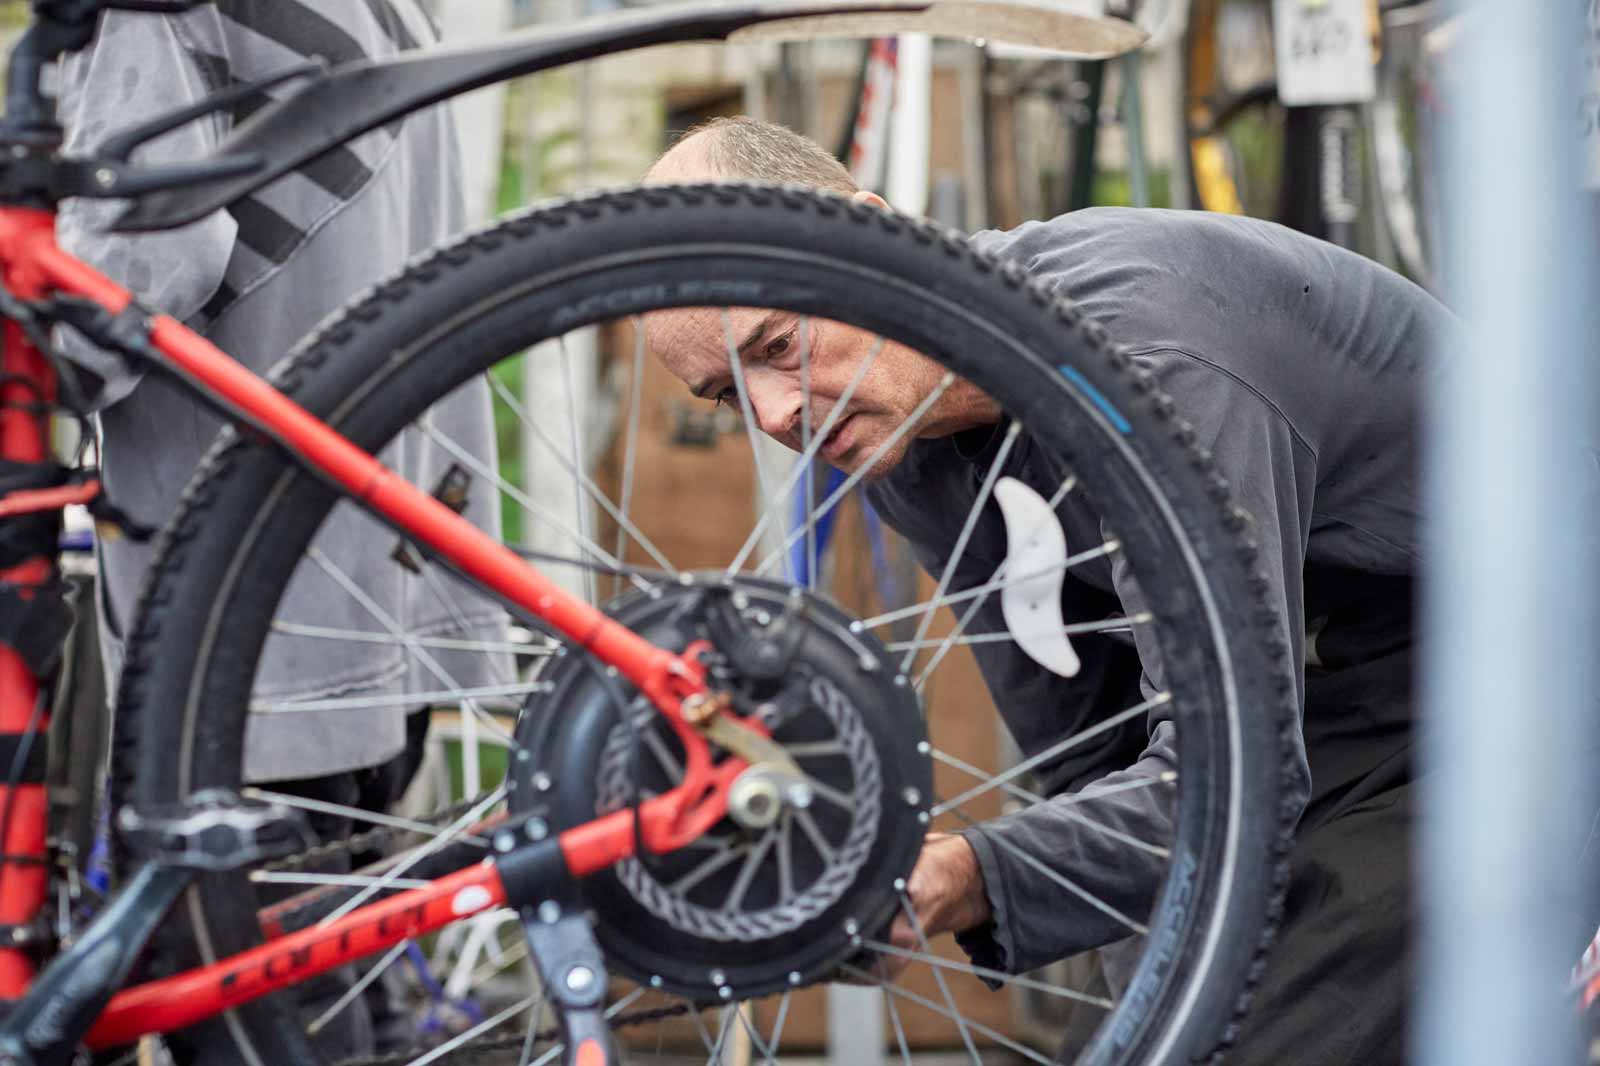 Getting the community moving - Brighton Bike Hub | Community Funding